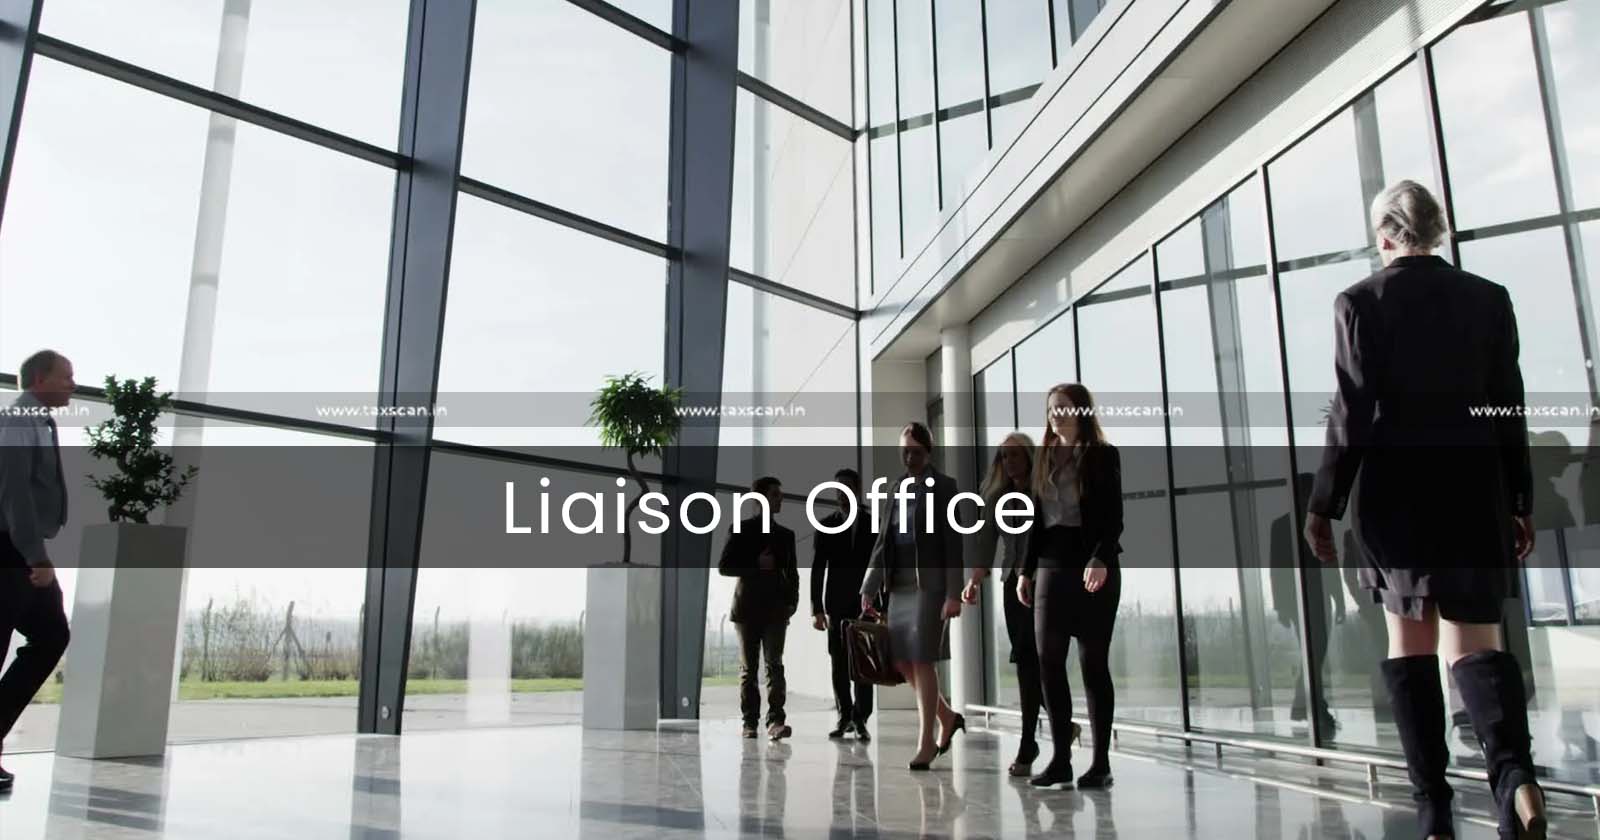 Liaison Office proprietary - Liaison Office - PE - India Switzerland DTAA - ITAT - Income Tax - taxscan